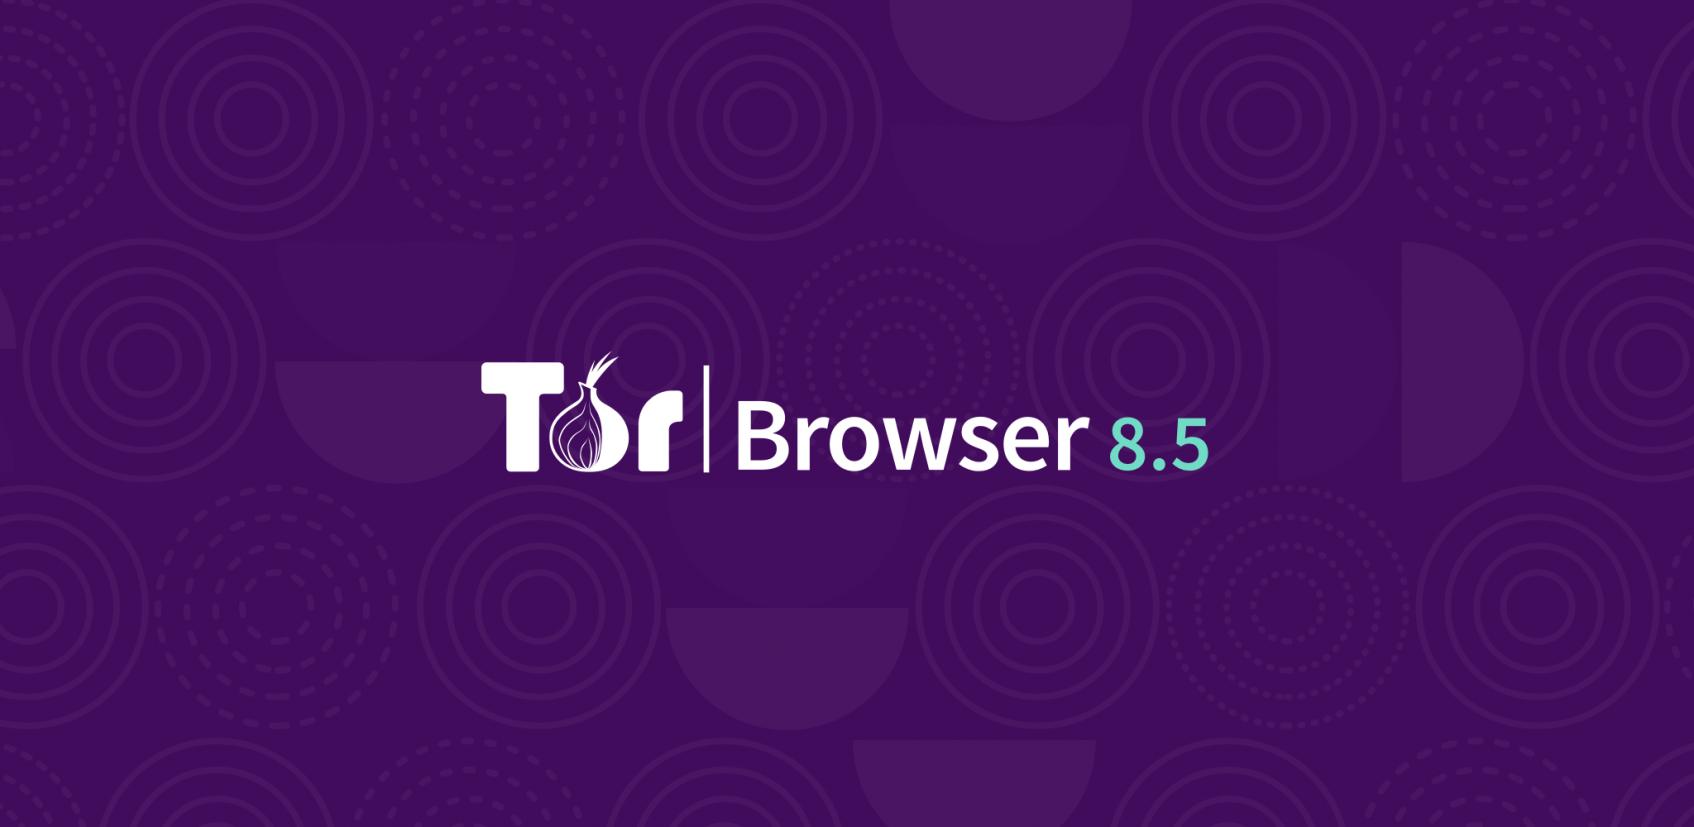 tor browser защищен hydra2web